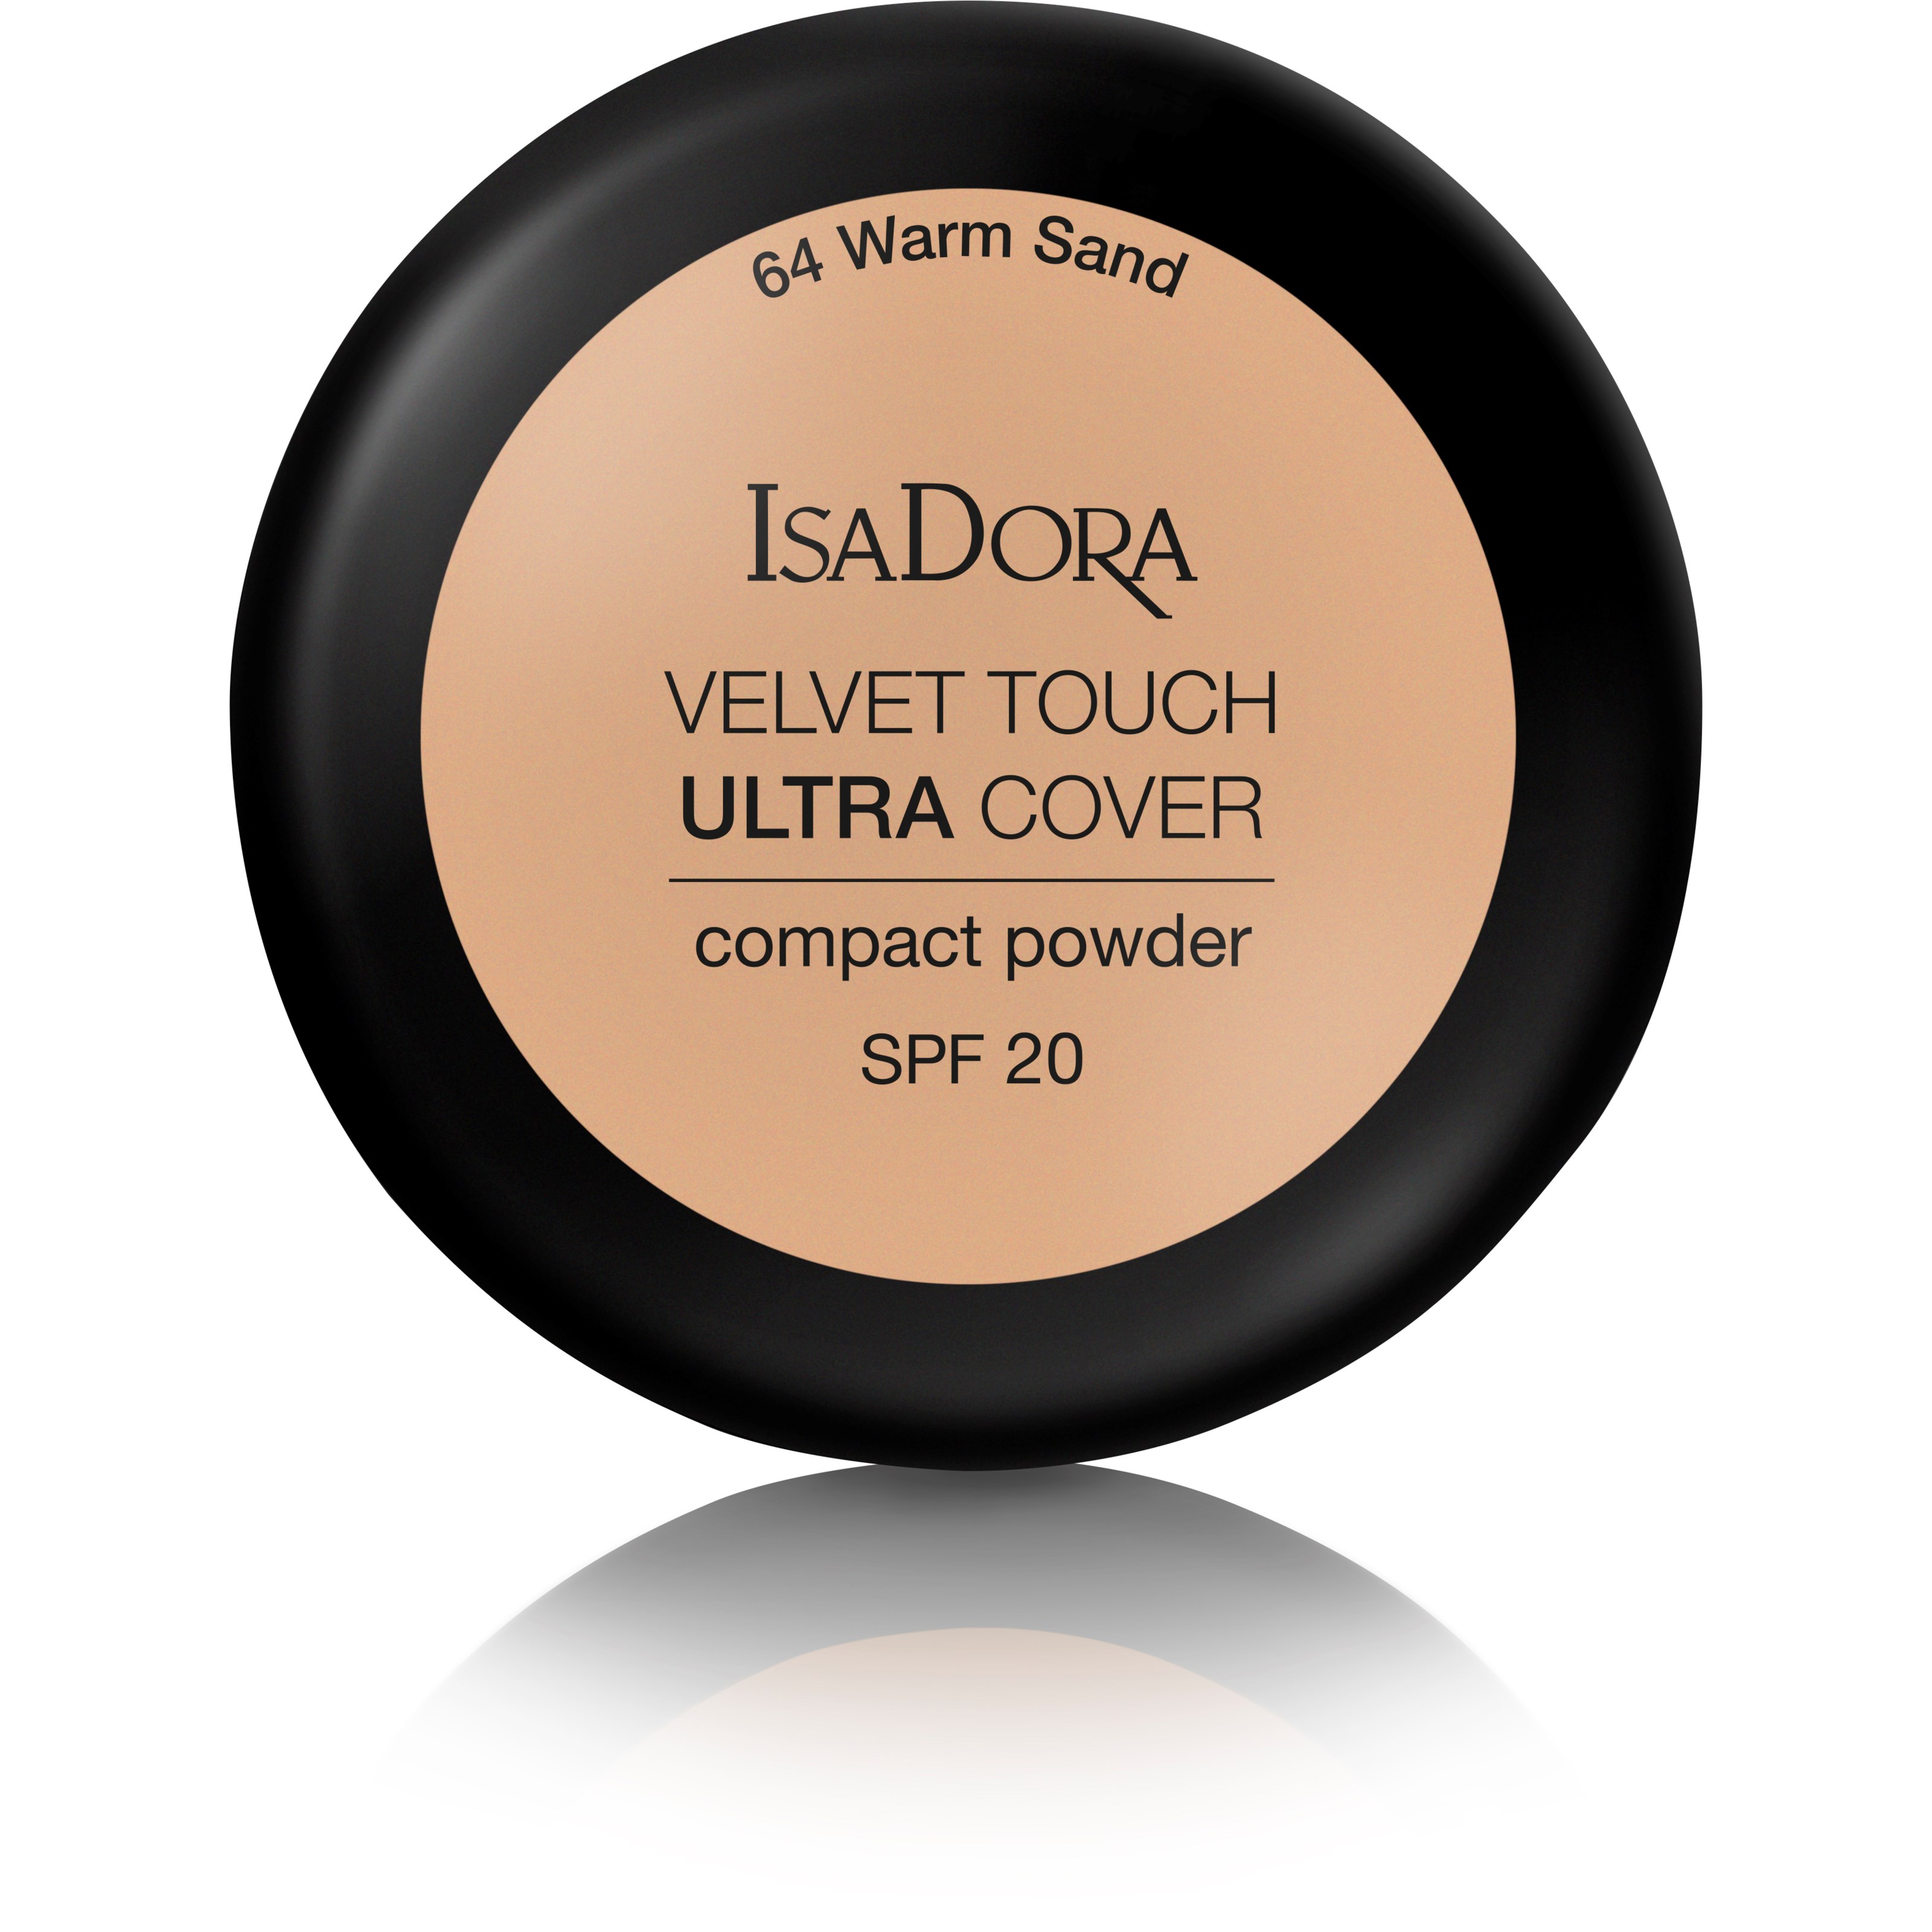 Läs mer om IsaDora Velvet Touch Ultra Cover Compact Power Spf 20 64 Warm Sand